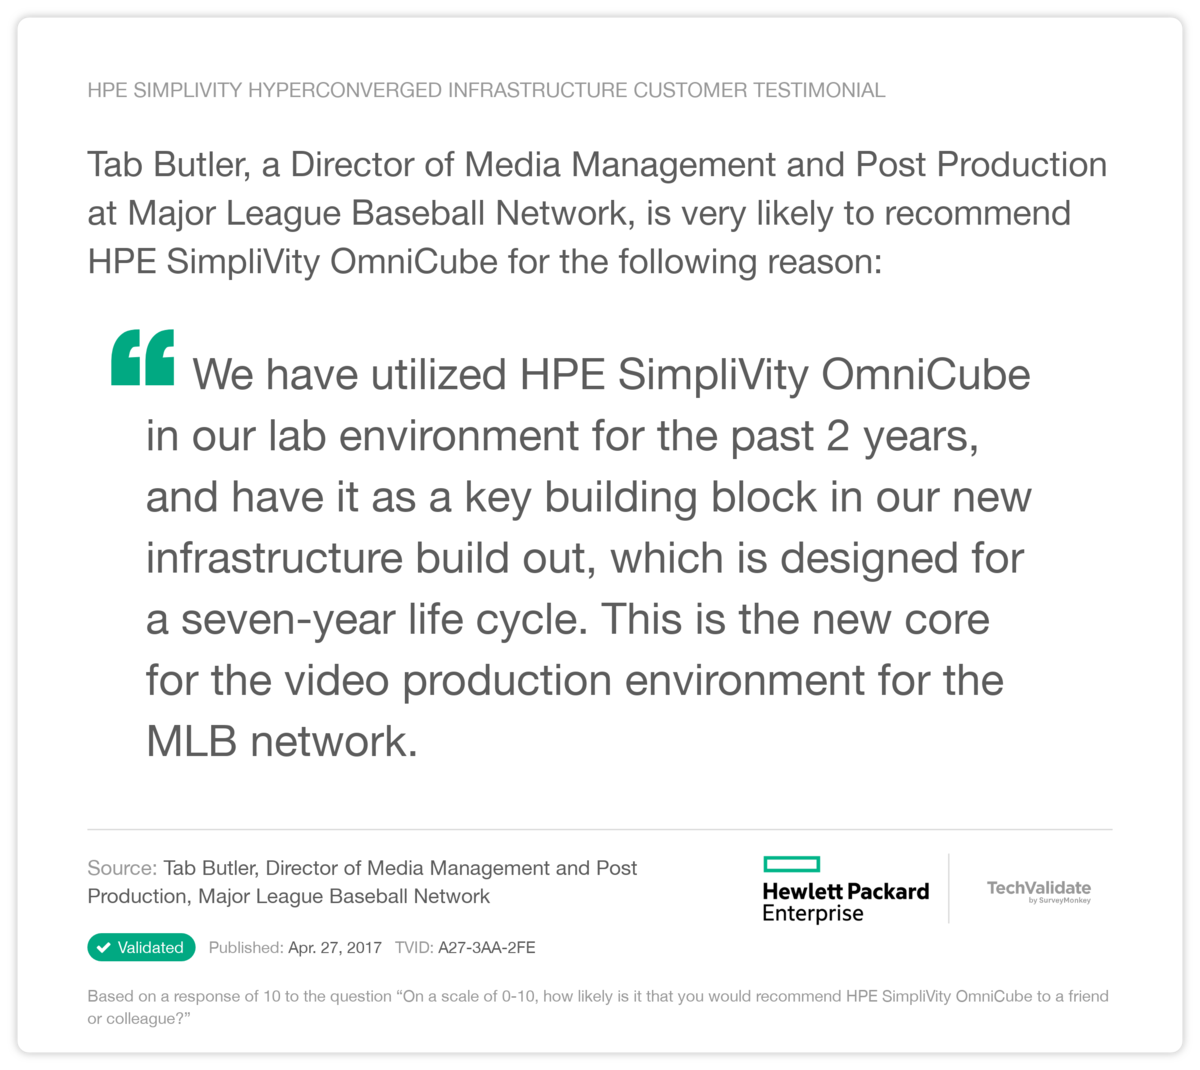 HPE SimpliVity Hyperconverged Infrastructure Customer Testimonial